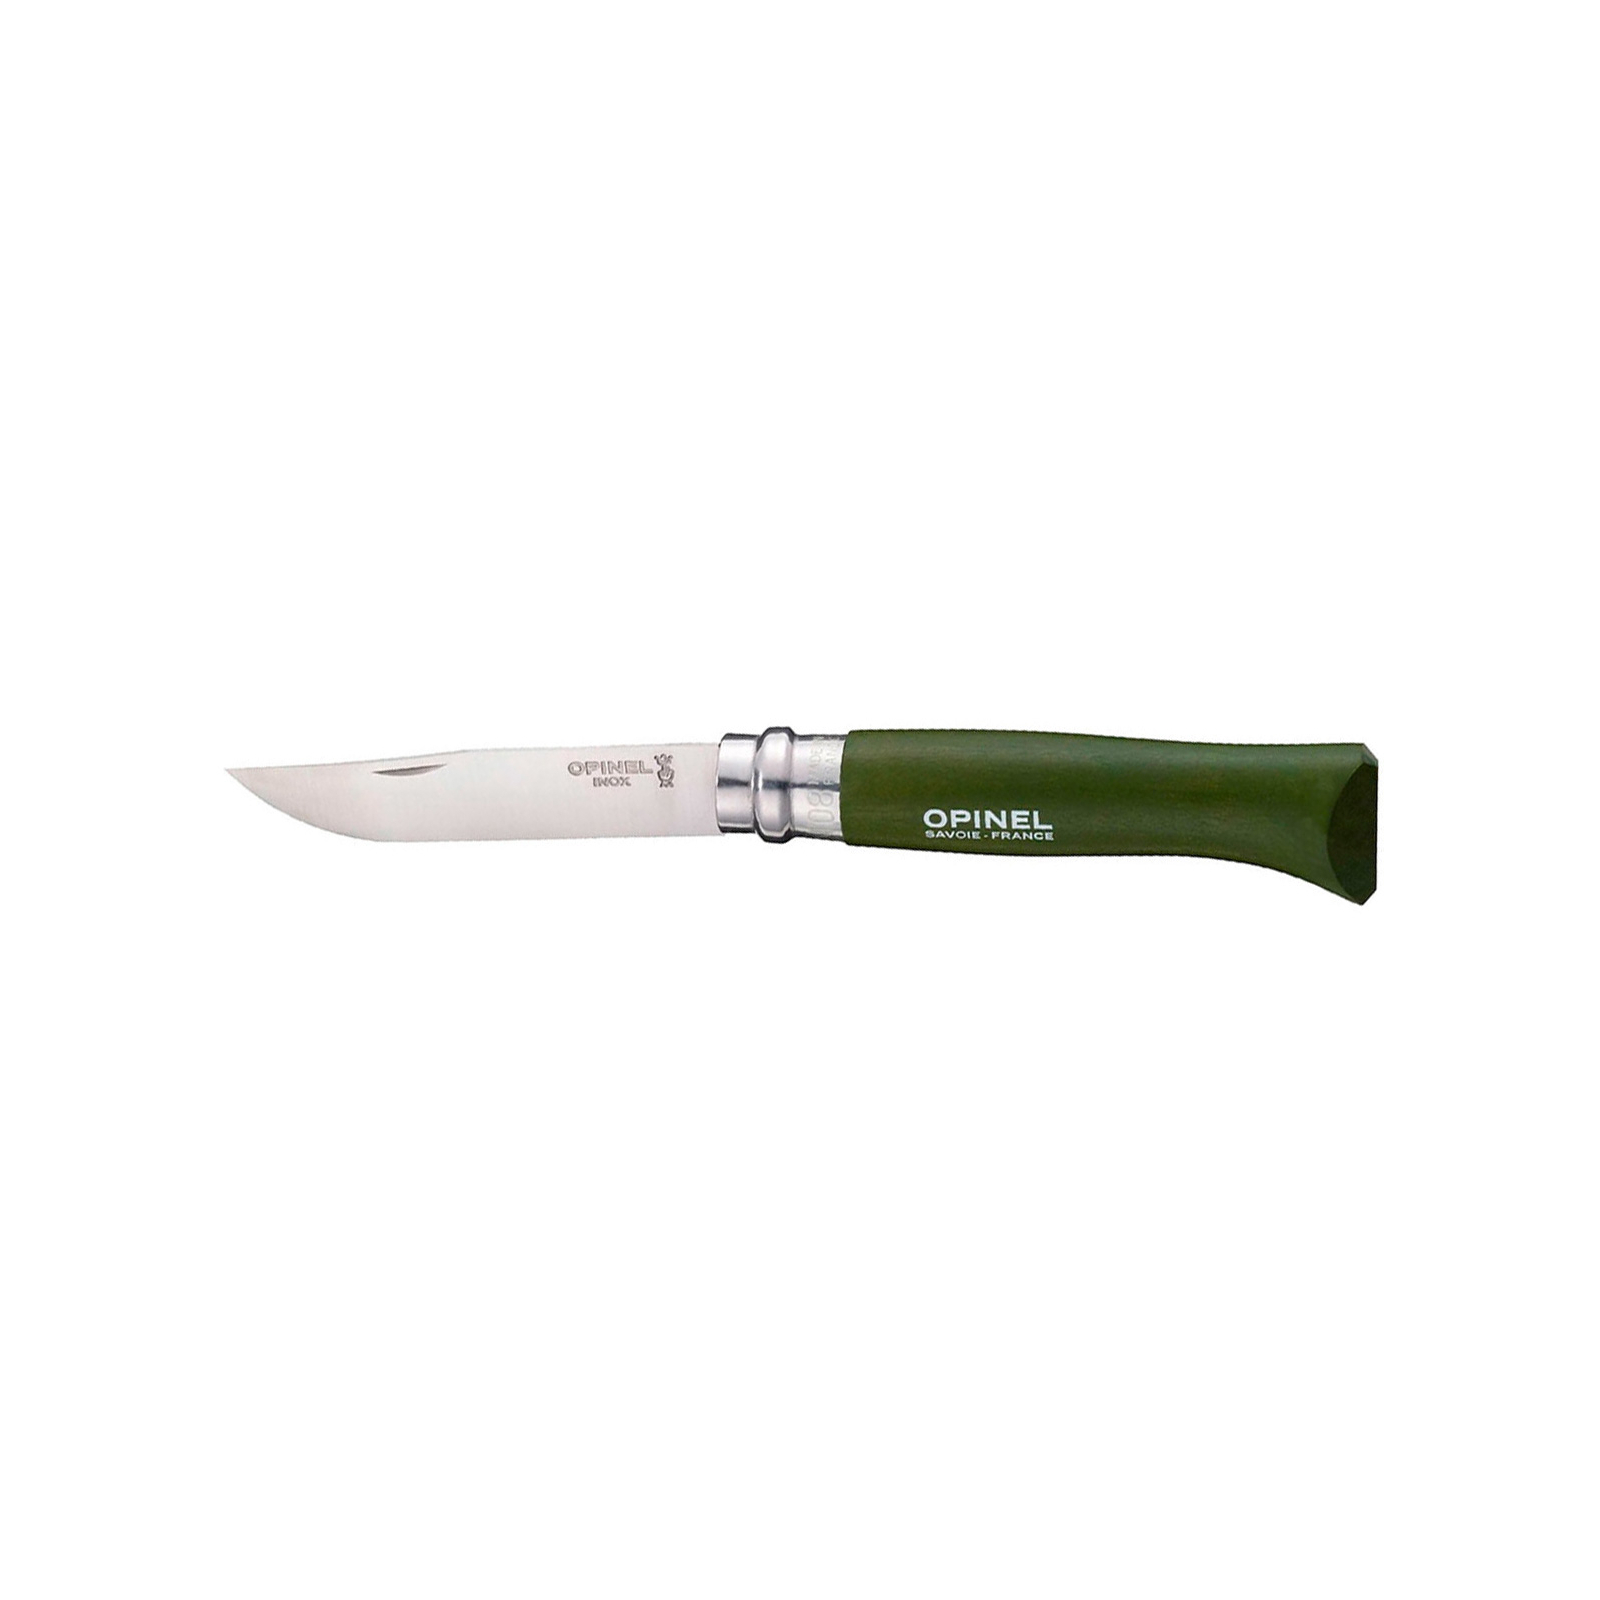 Нож Opinel №8 Inox VRI зеленый, в блистере (001980)